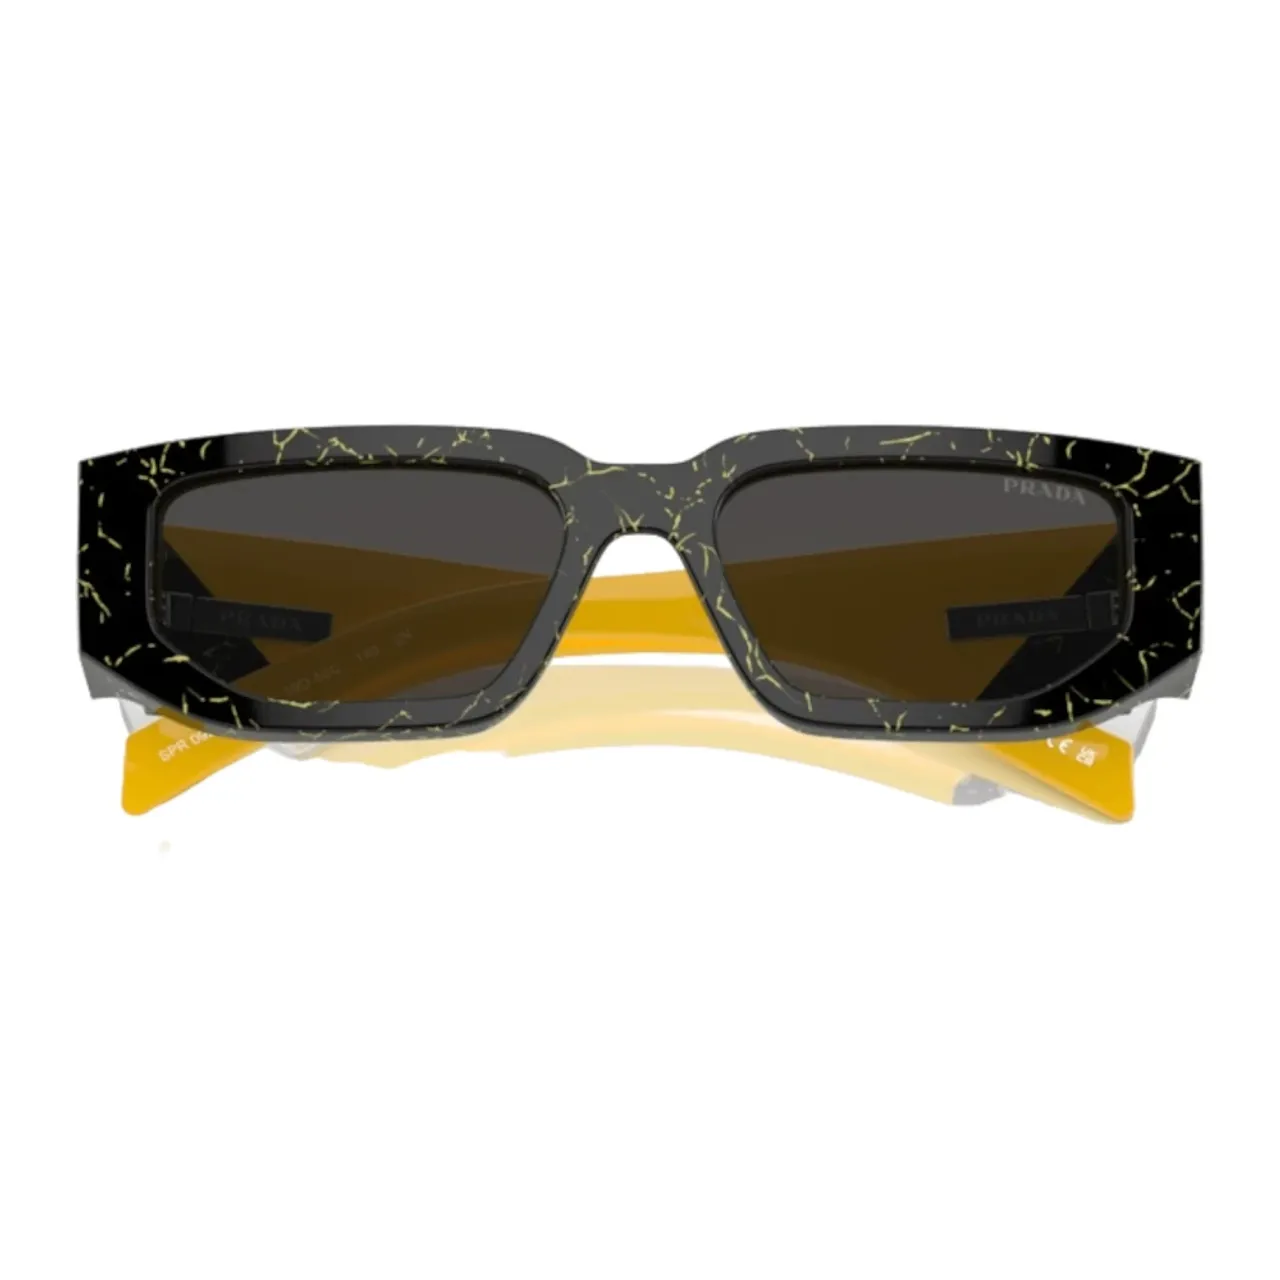 Moderne stilvolle Sonnenbrille Prada